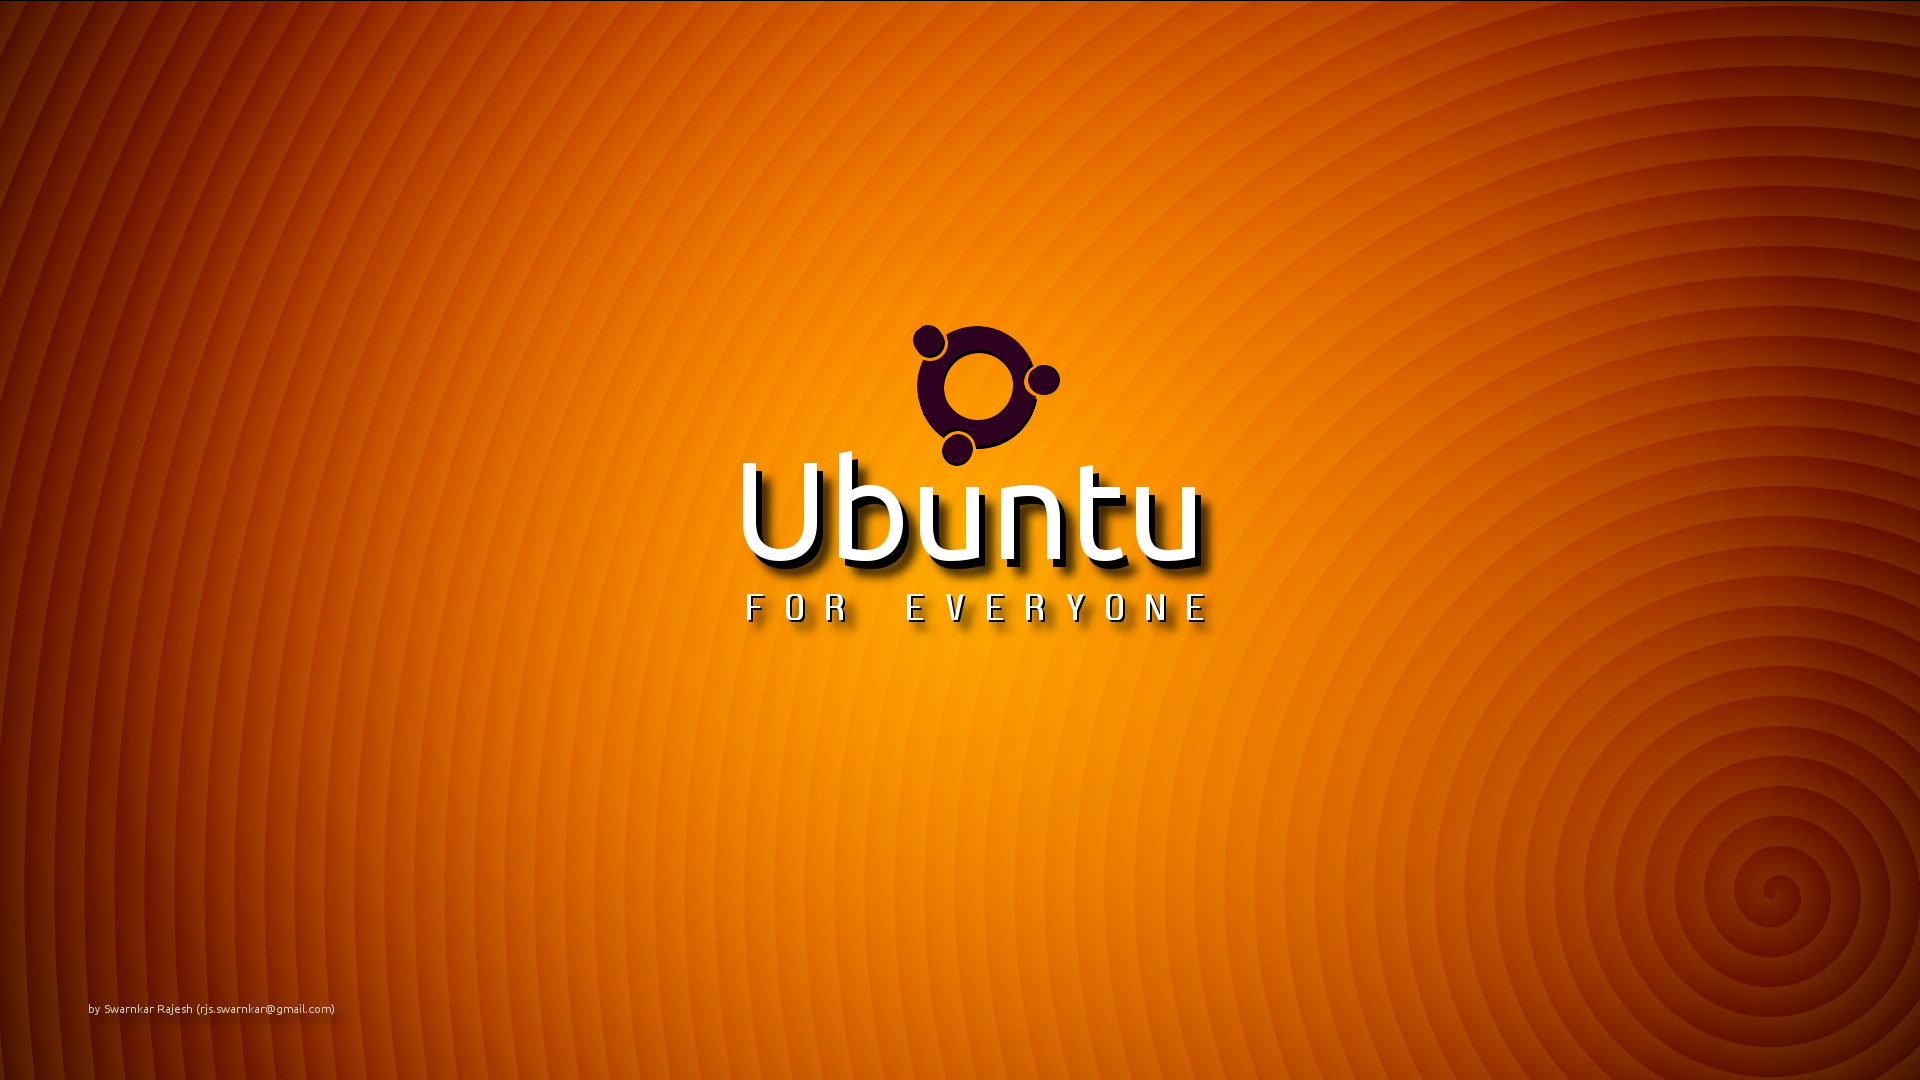 Ubuntu HD Wallpaper By Rajeshswarnkar